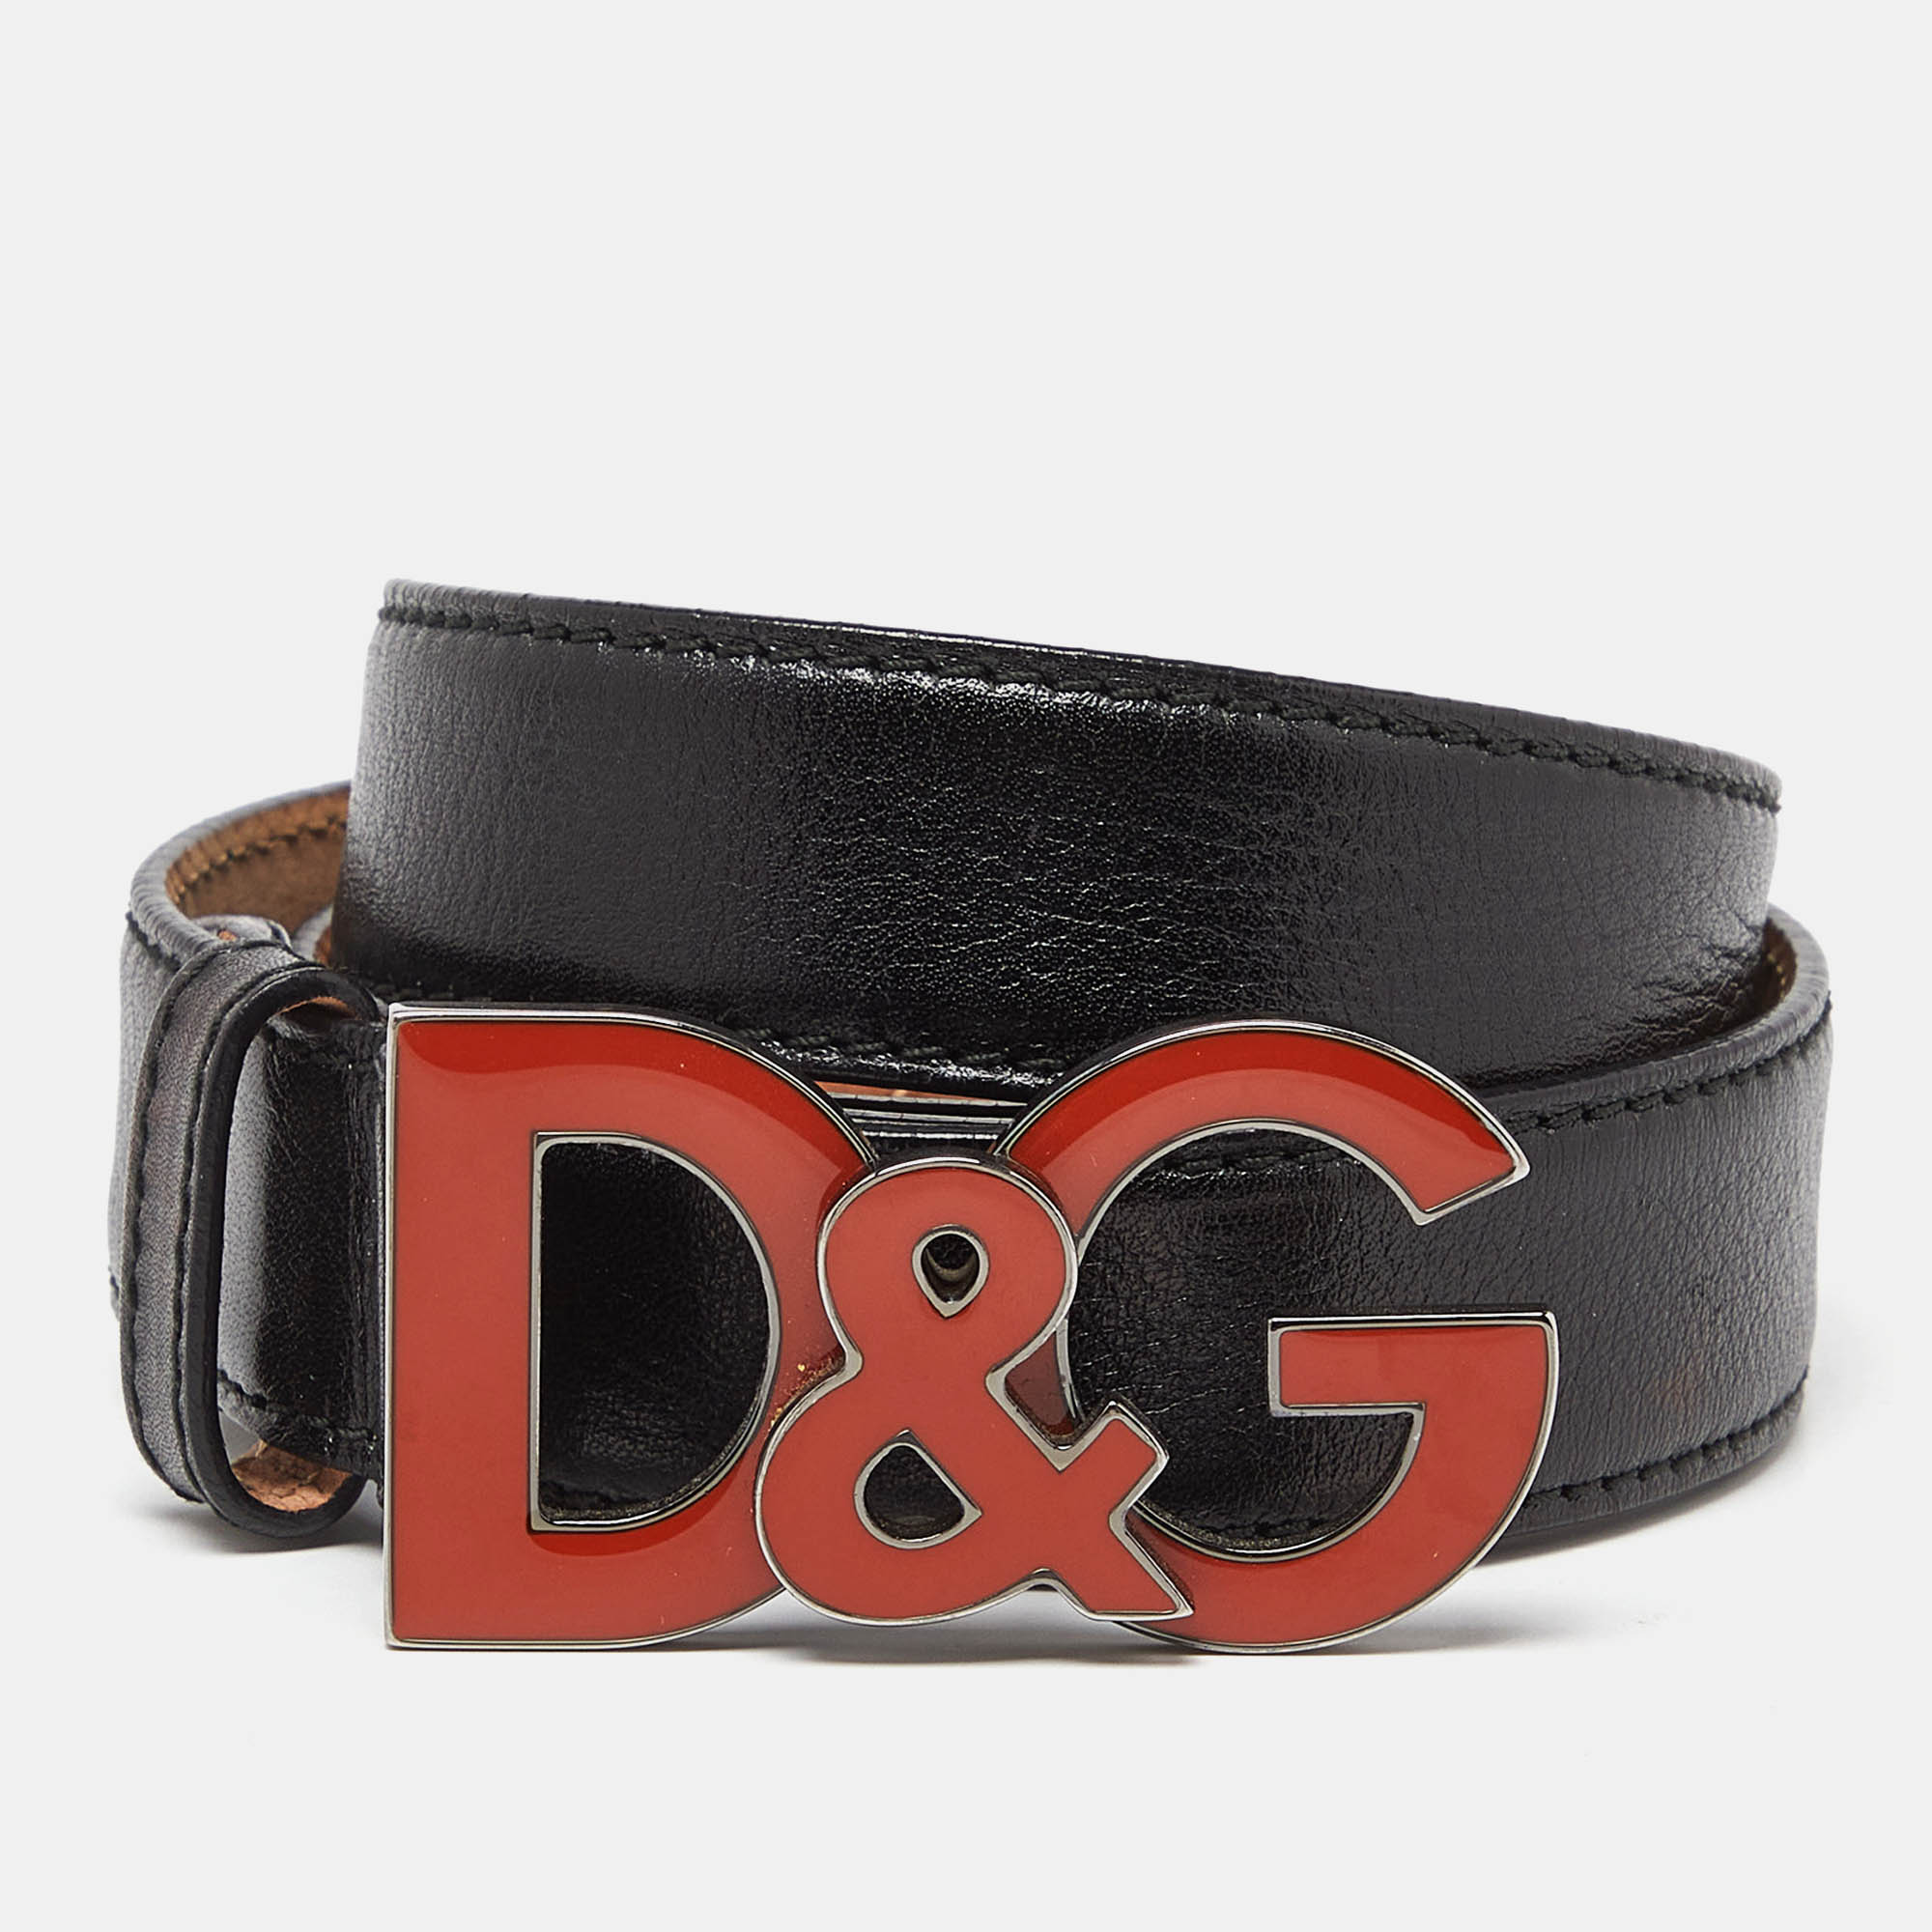 Dolce & gabbana black leather d&g logo buckle belt 90cm